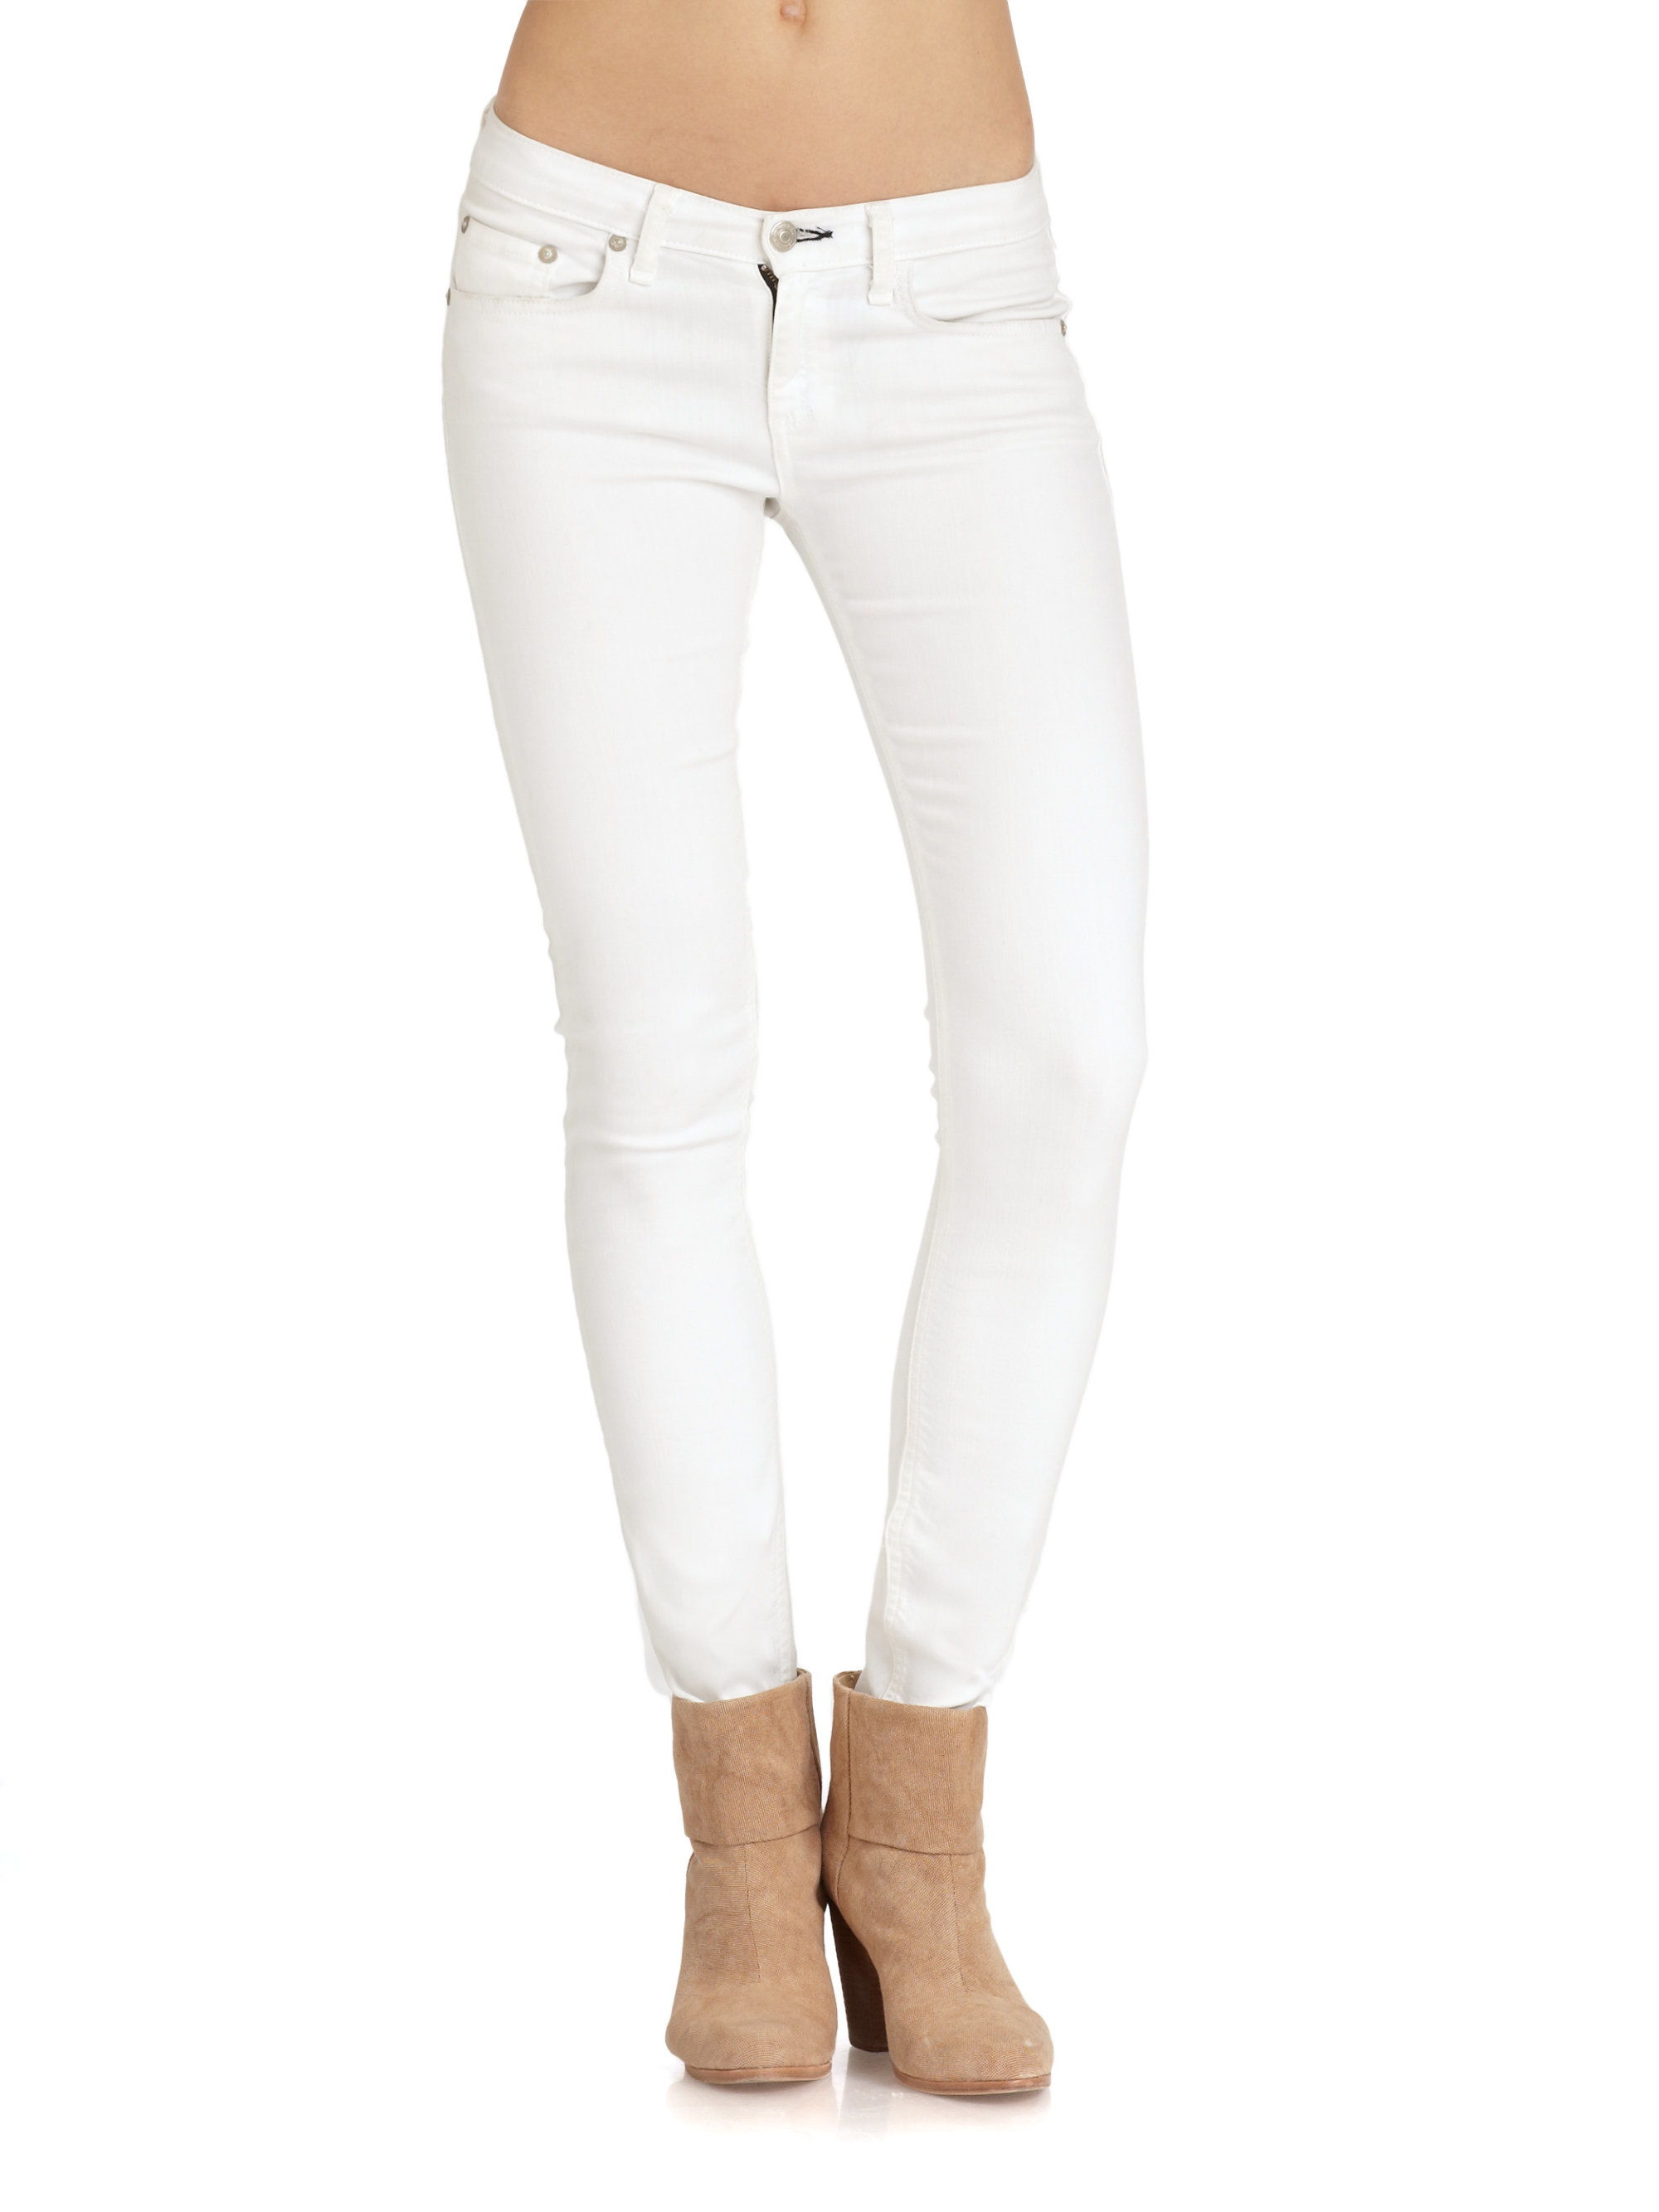 Rag & bone The Skinny Jeans in White | Lyst